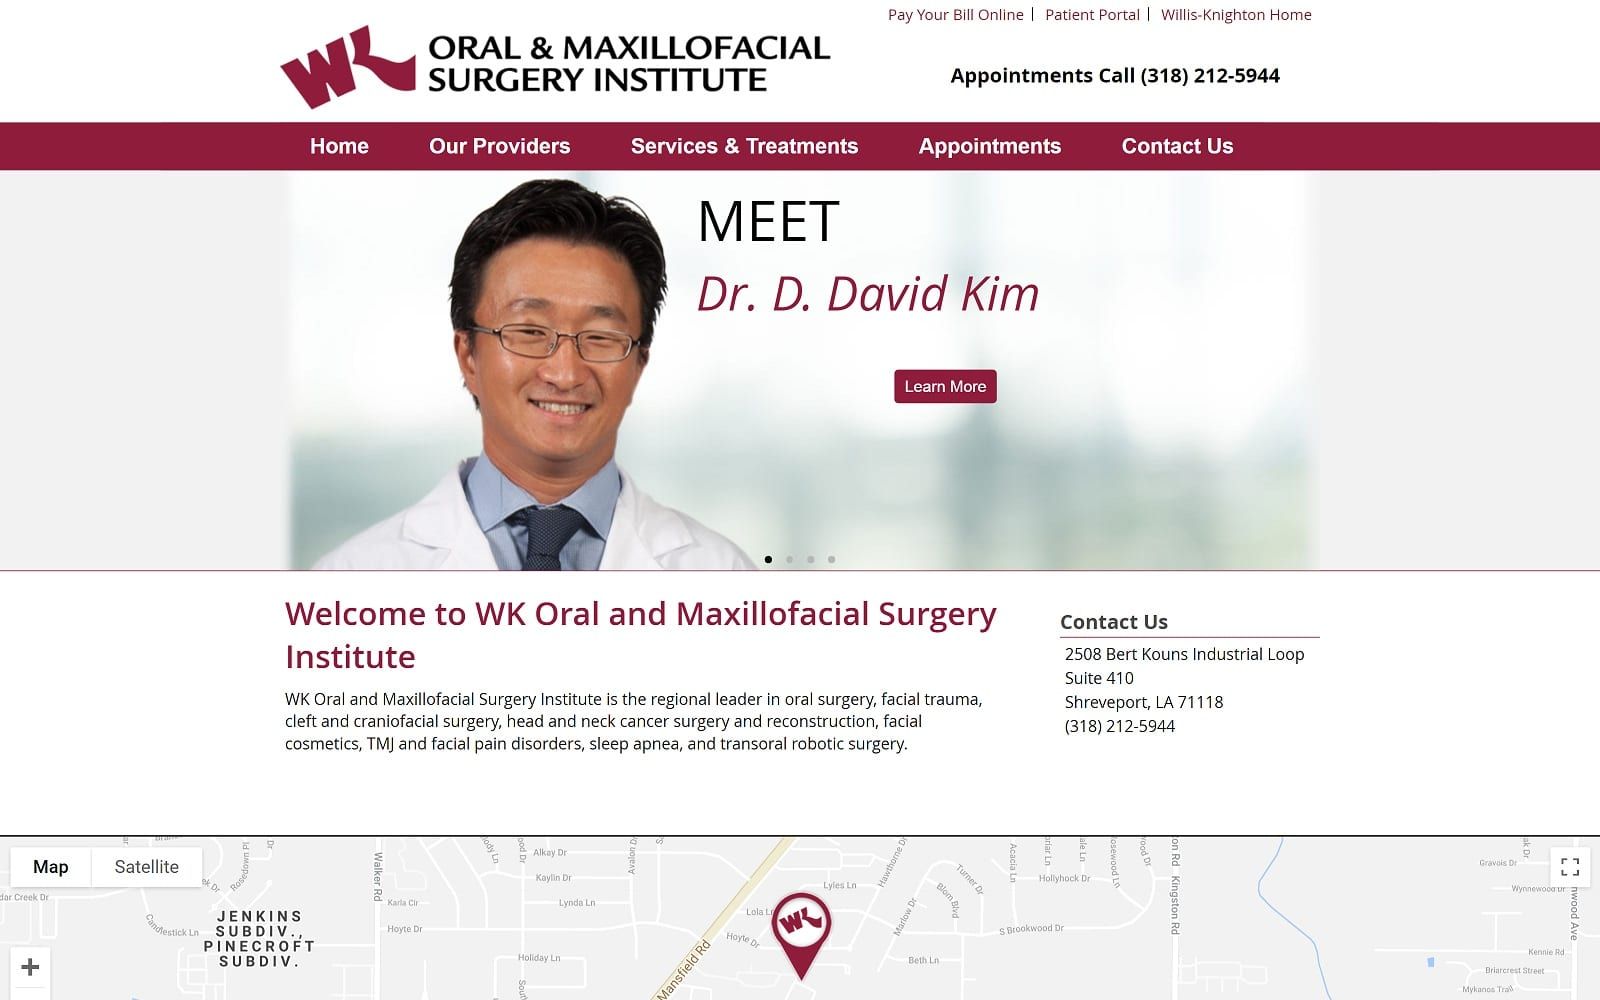 The screenshot of wk/univ oral & maxillofacial wkomsi. Com dr. David kim website